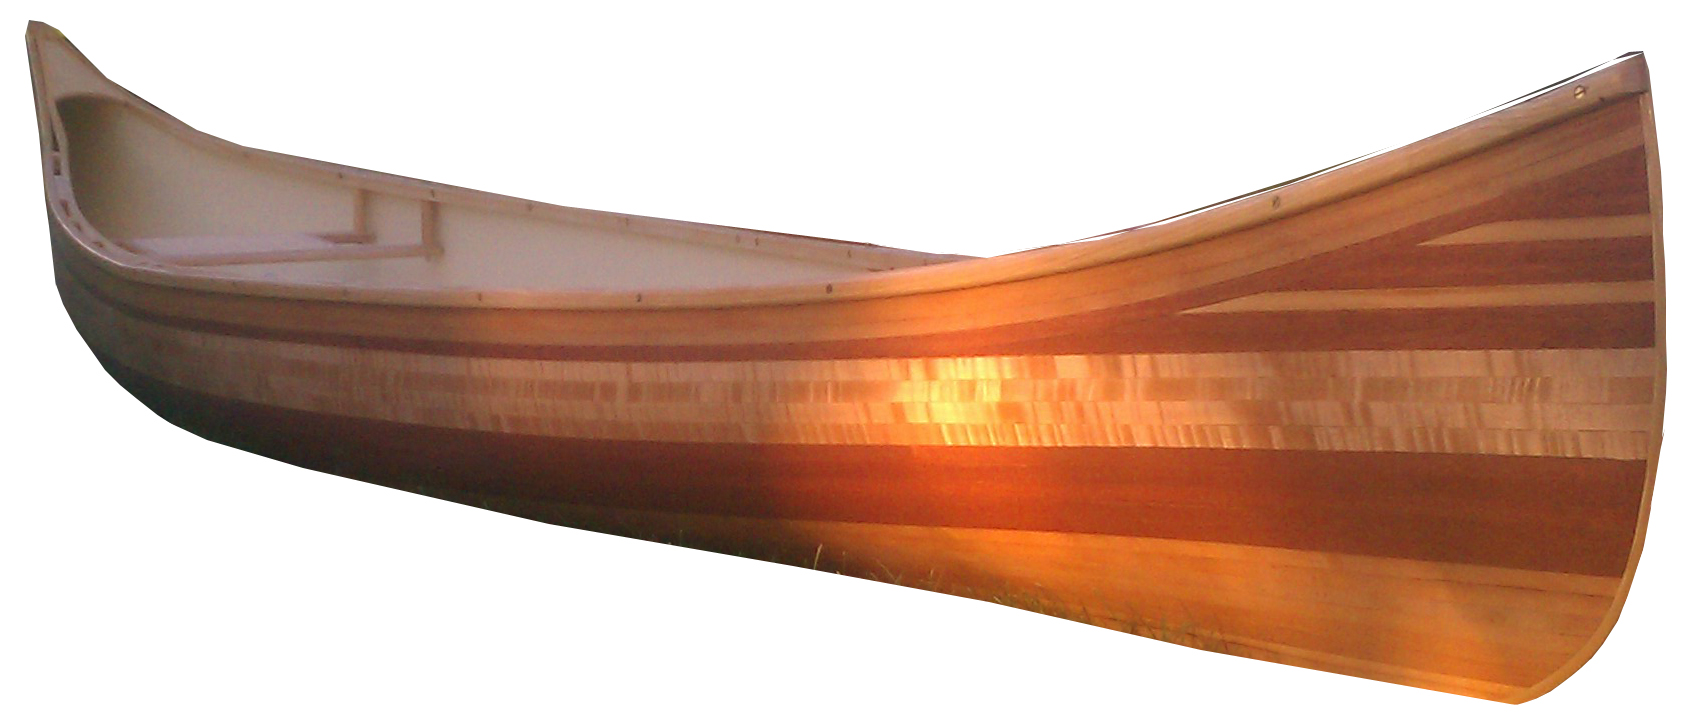 Wood Strip Canoe